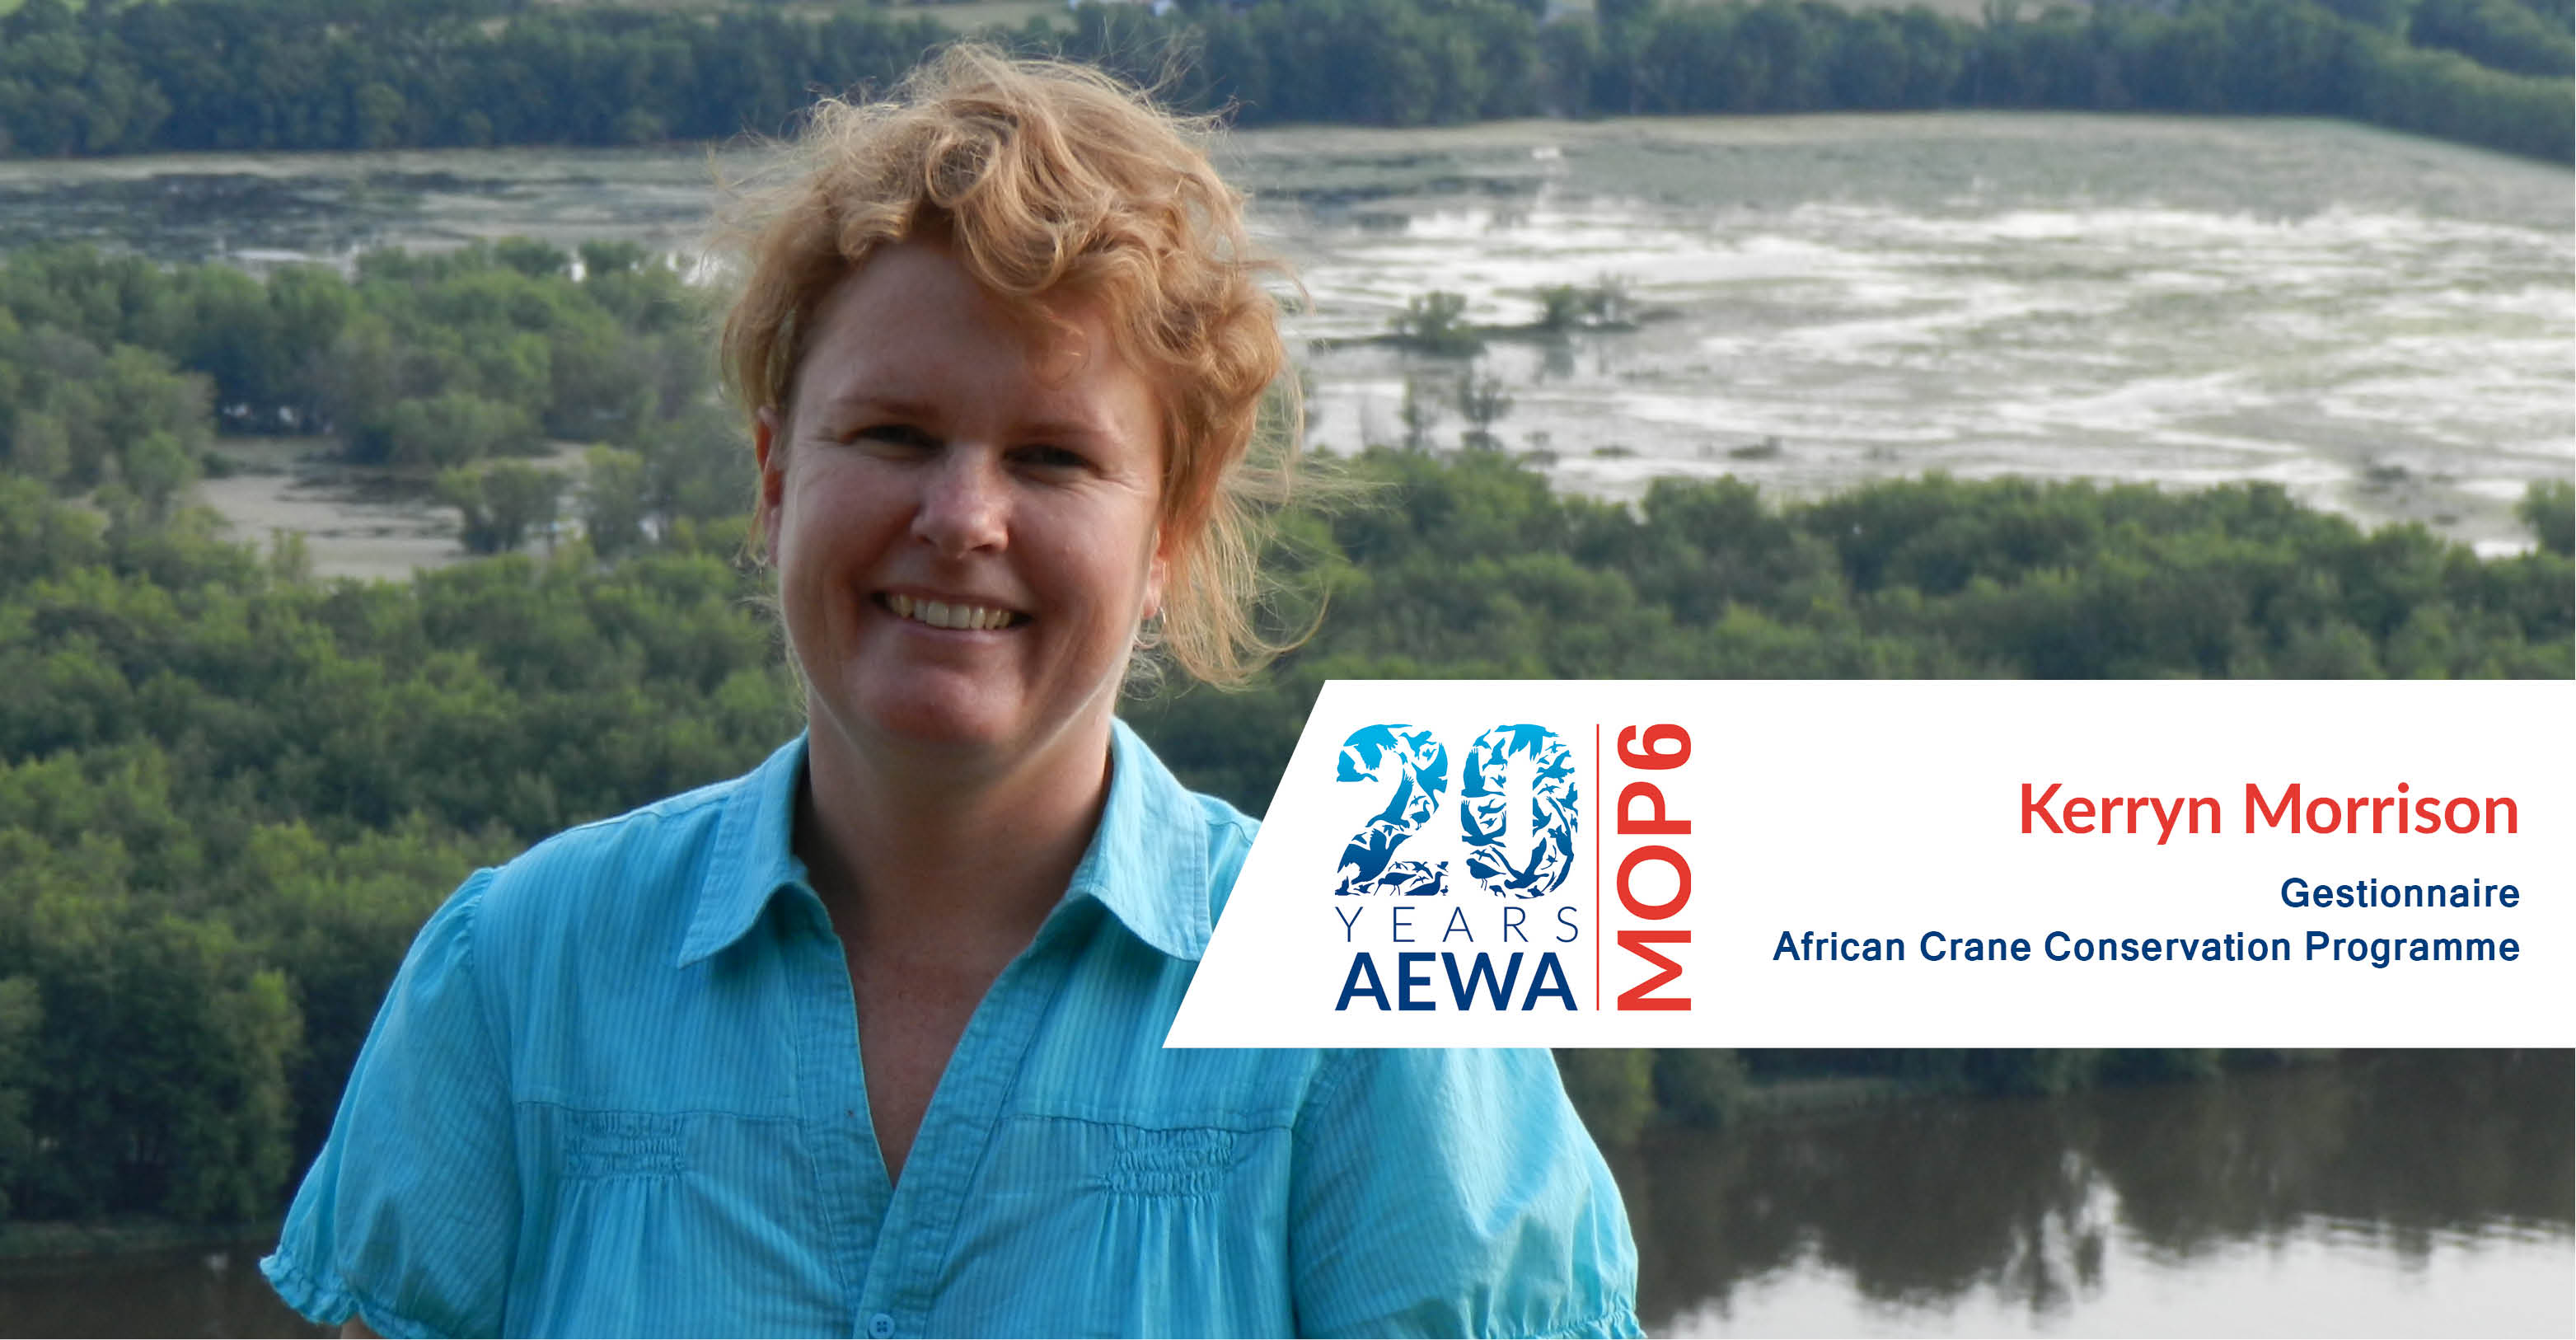 Mme Kerryn Morrison, Gestionnaire, African Crane Conservation Programme 